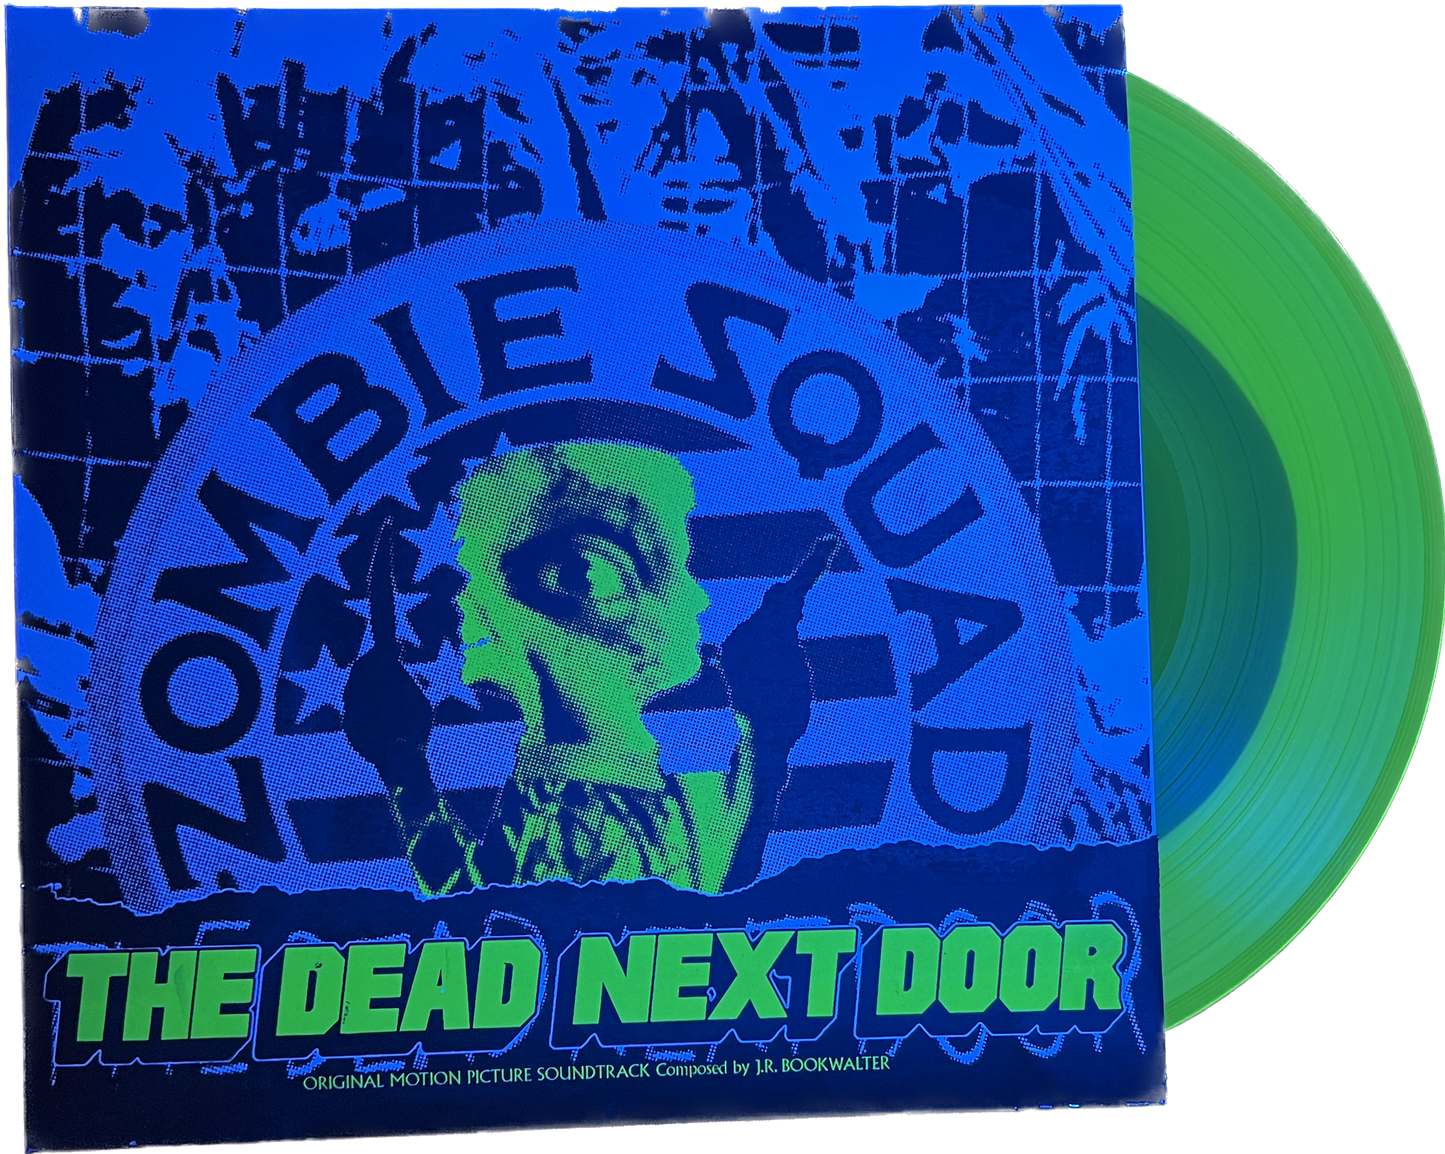 THE DEAD NEXT DOOR (1989) OST LP SCREEN PRINTED GREEN GLOWING VARIANT